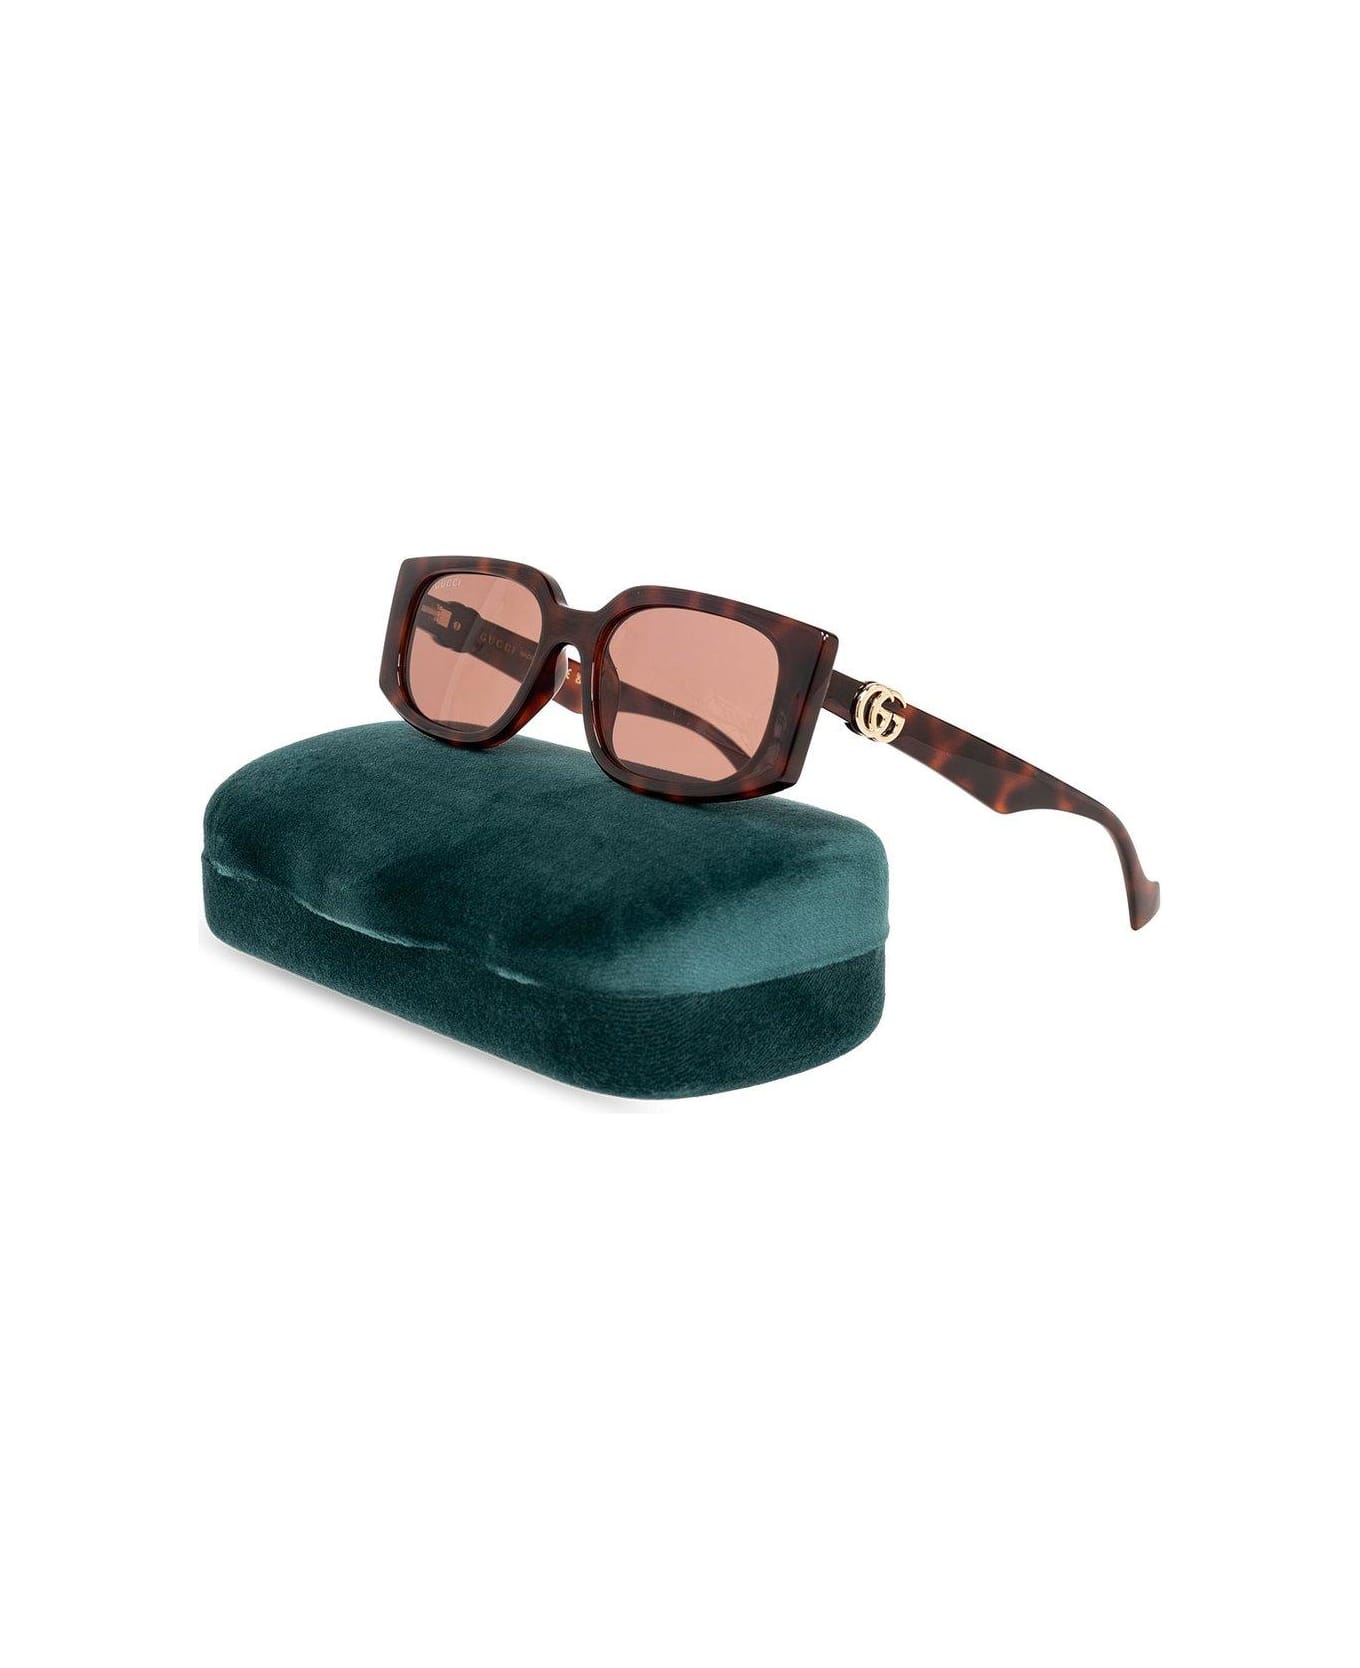 Gucci Eyewear Rectangle Frame Sunglasses - Havana Brown サングラス